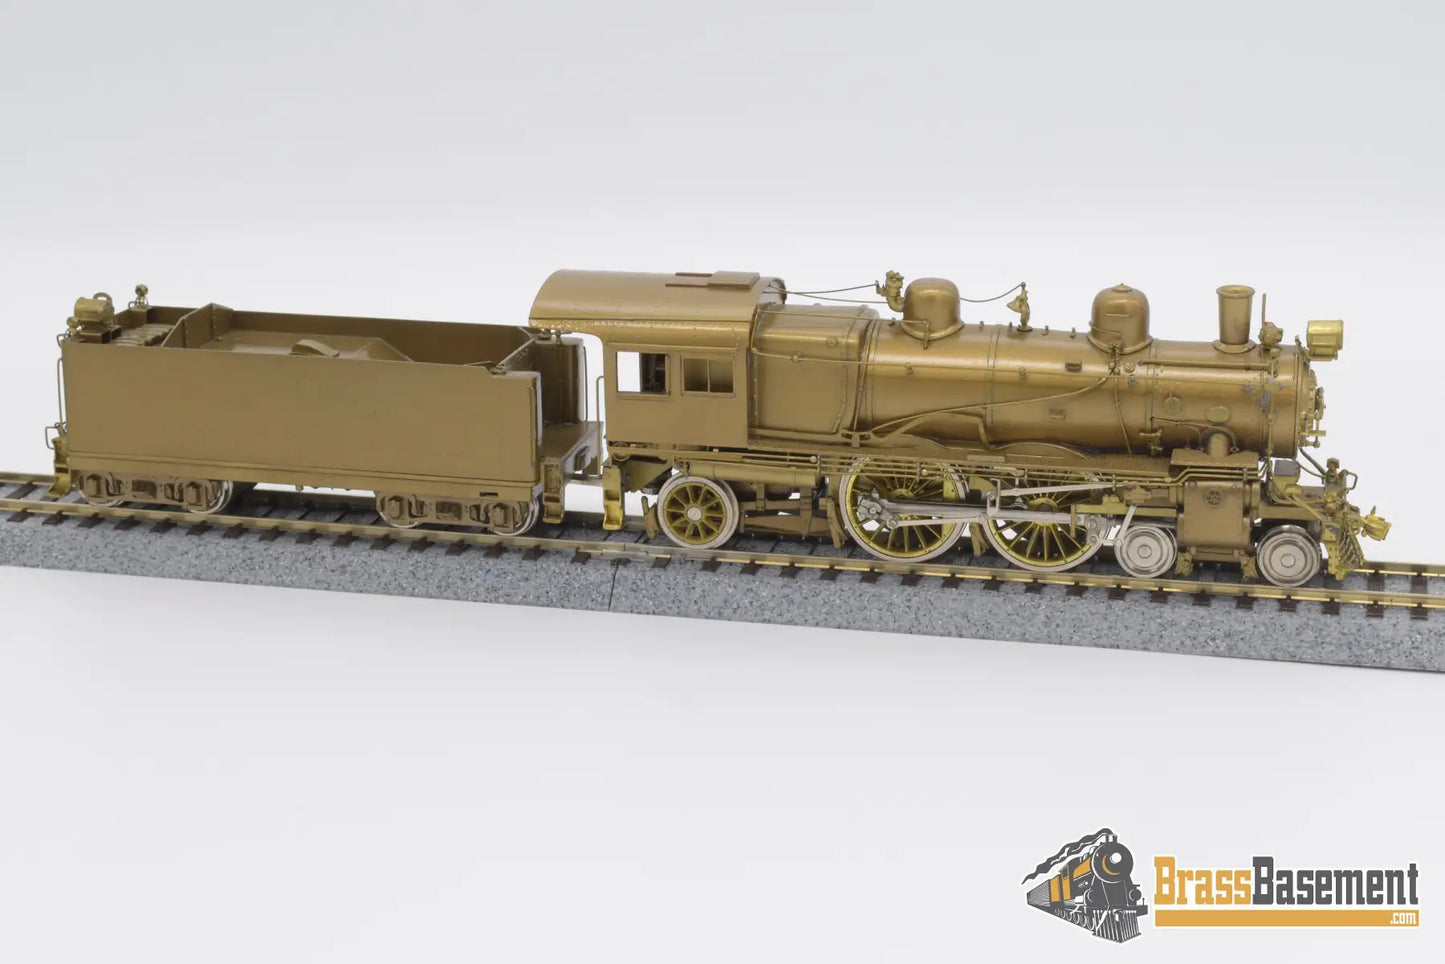 Ho Brass - Njcb Prr Pennsylvania Rr E3Sd 4 - 4 - 2 Atlantic Unpainted Steam